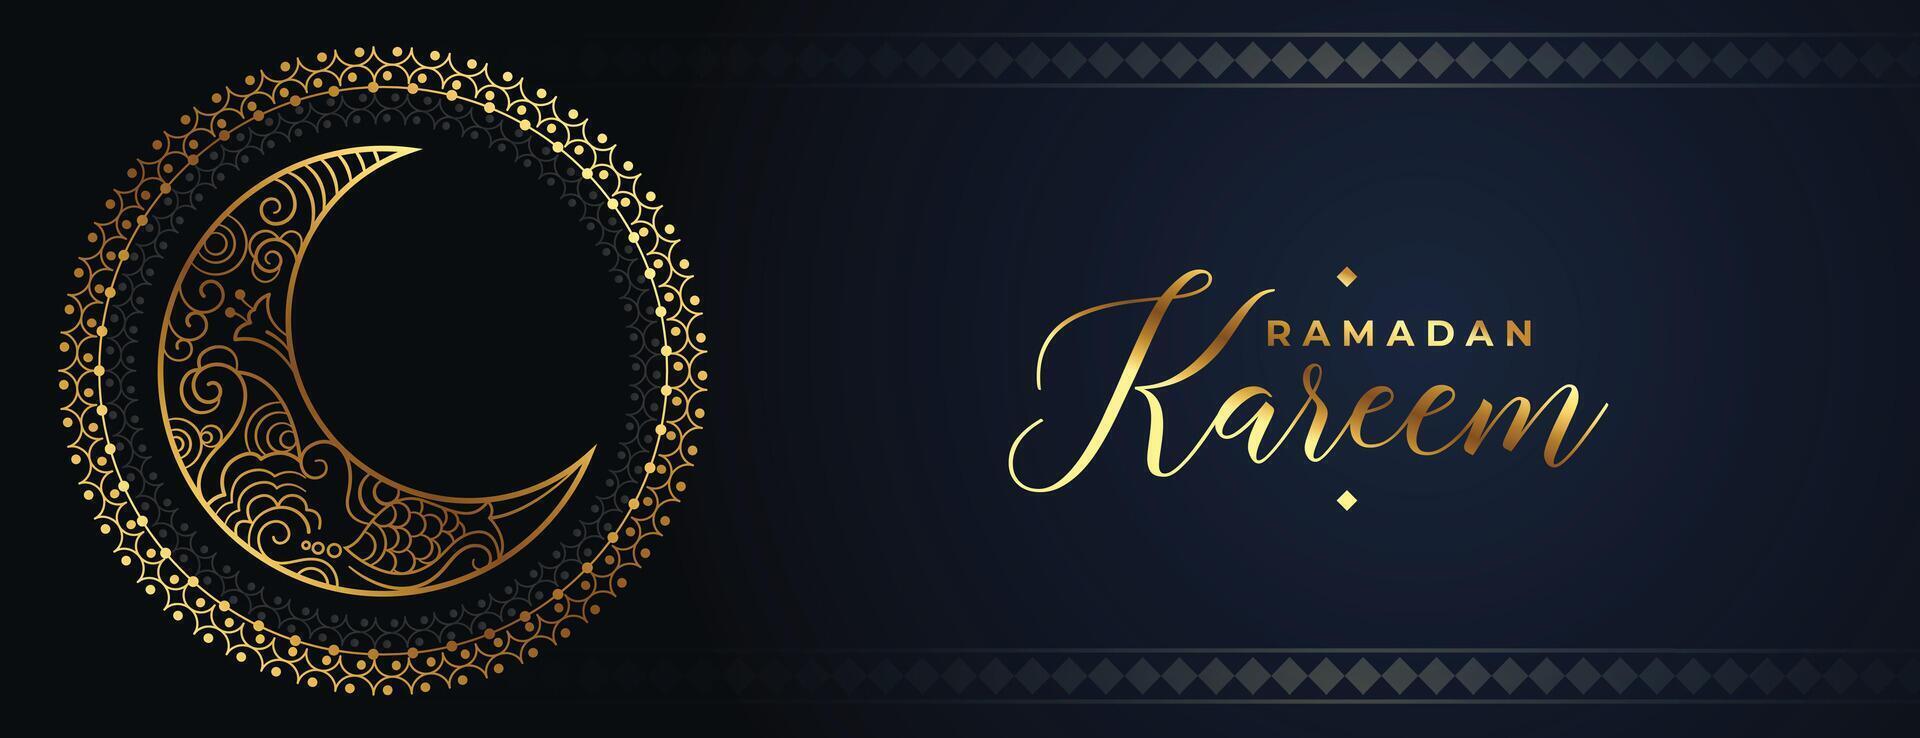 dekorativ Ramadan kareem Arabisch Stil golden Mond Banner vektor